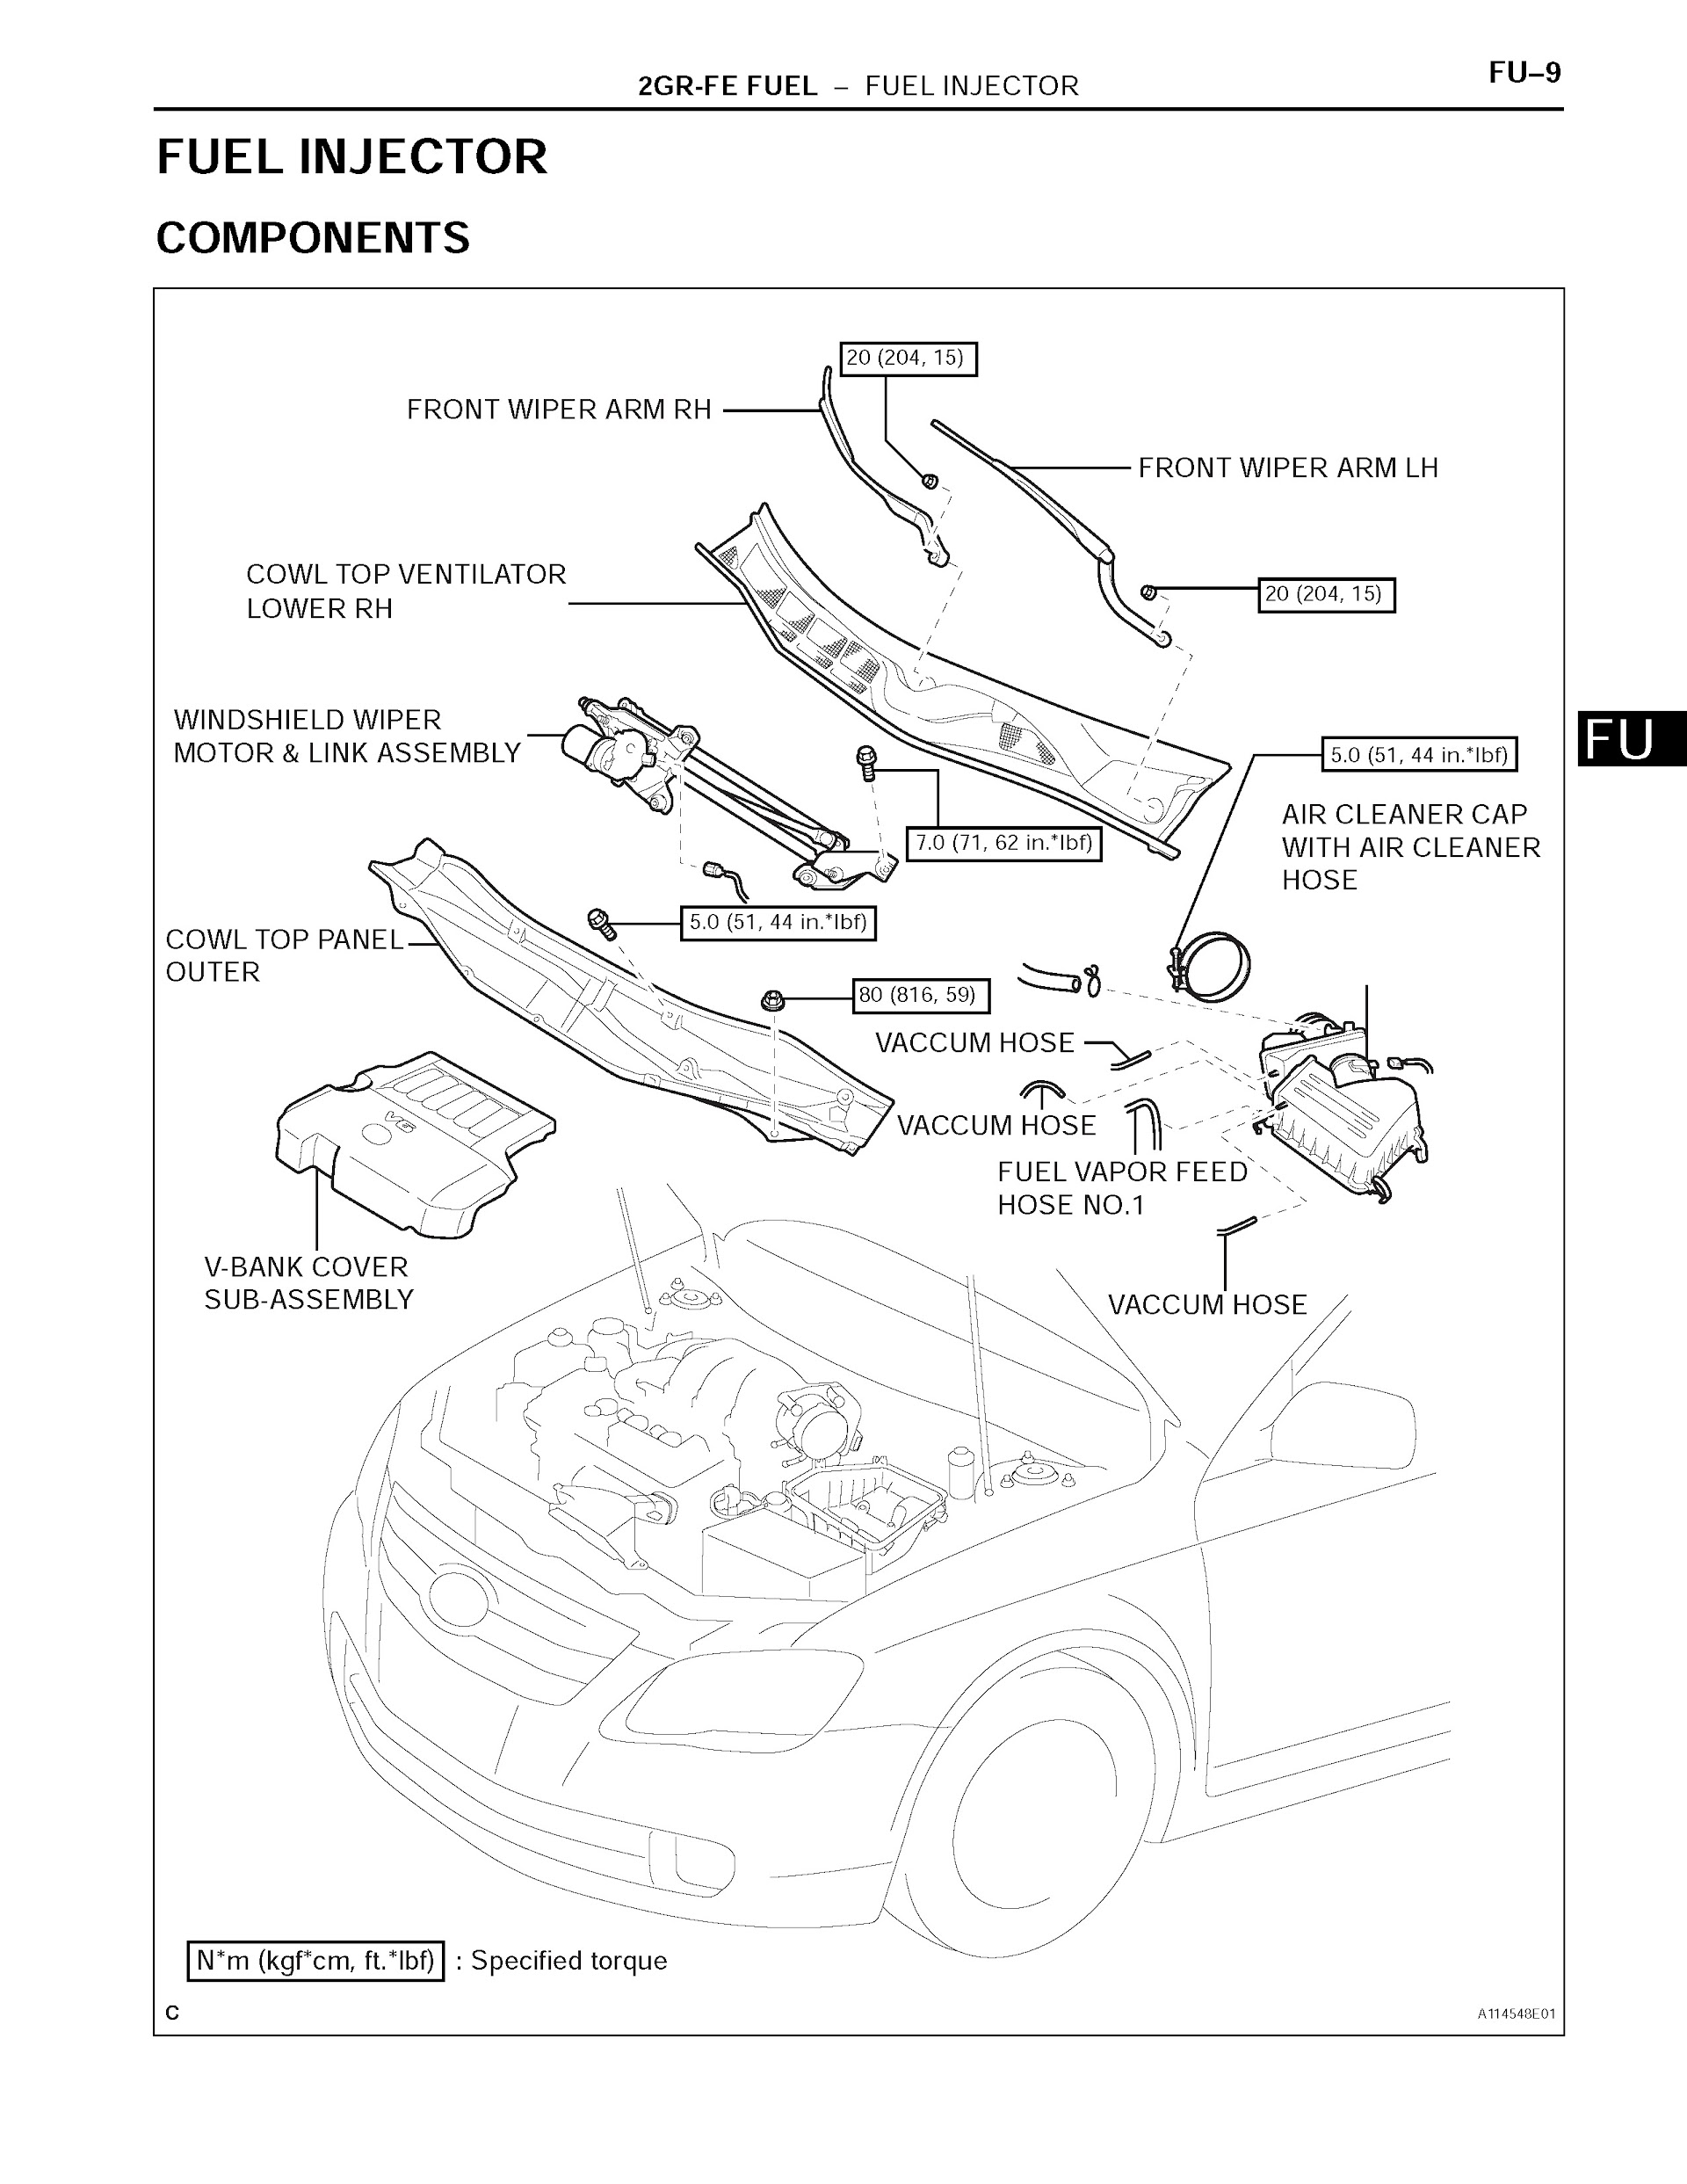 2006 Toyota Avalon Repair Manual, 2GR-FE Fuel Injector